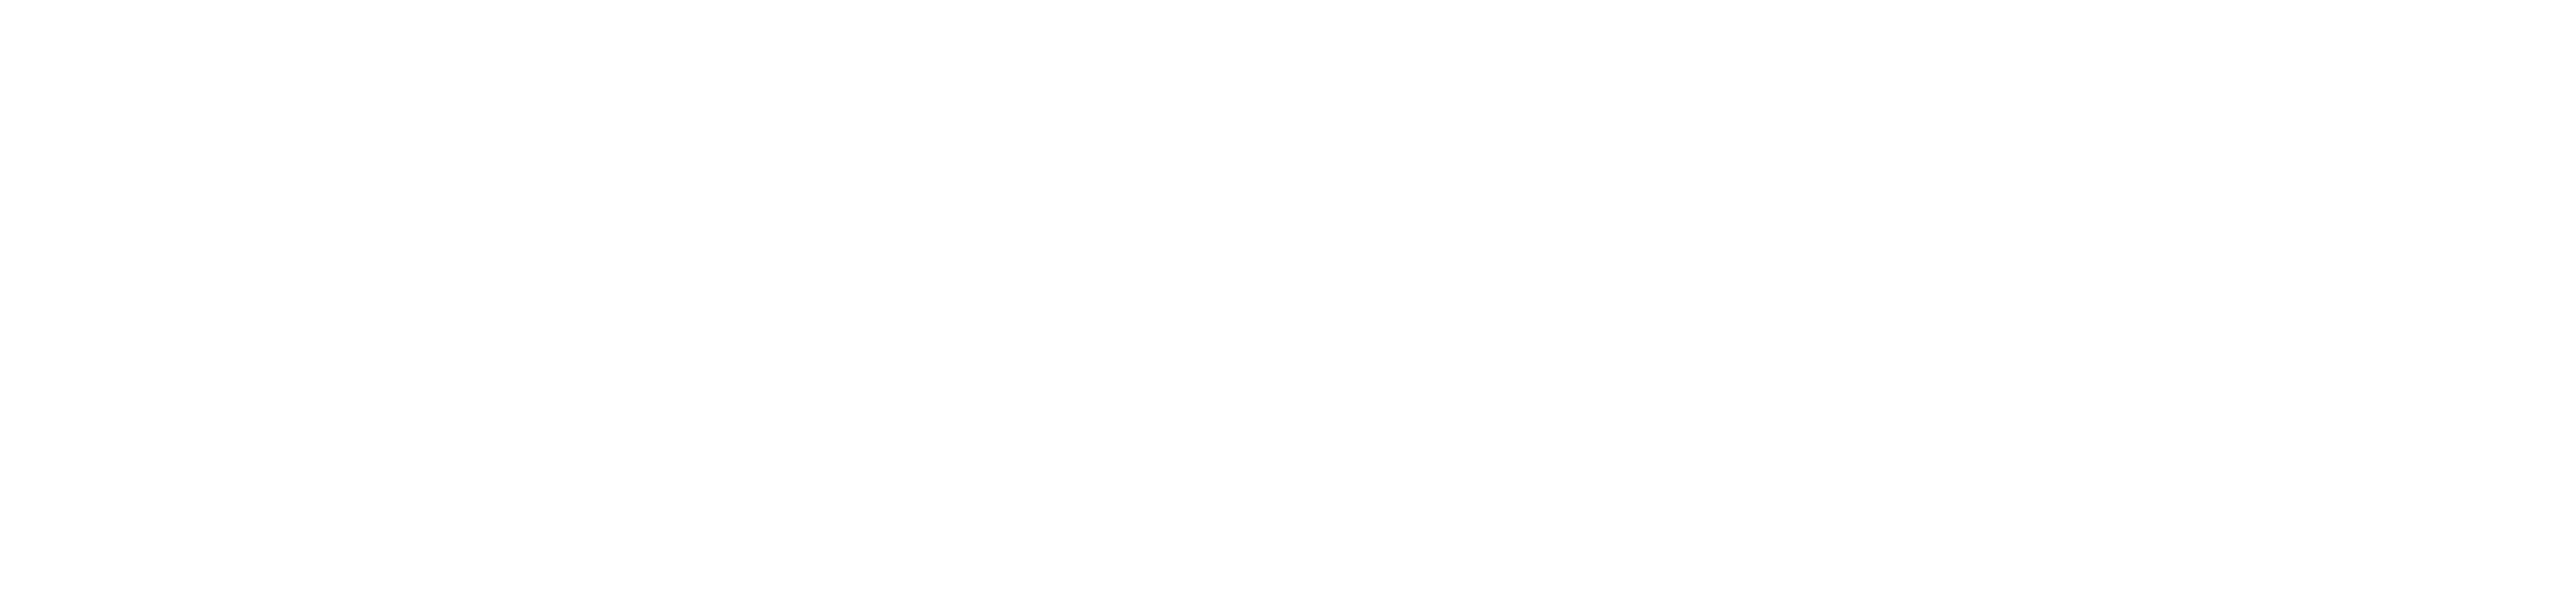 Druids Glen Hotel & Golf Course